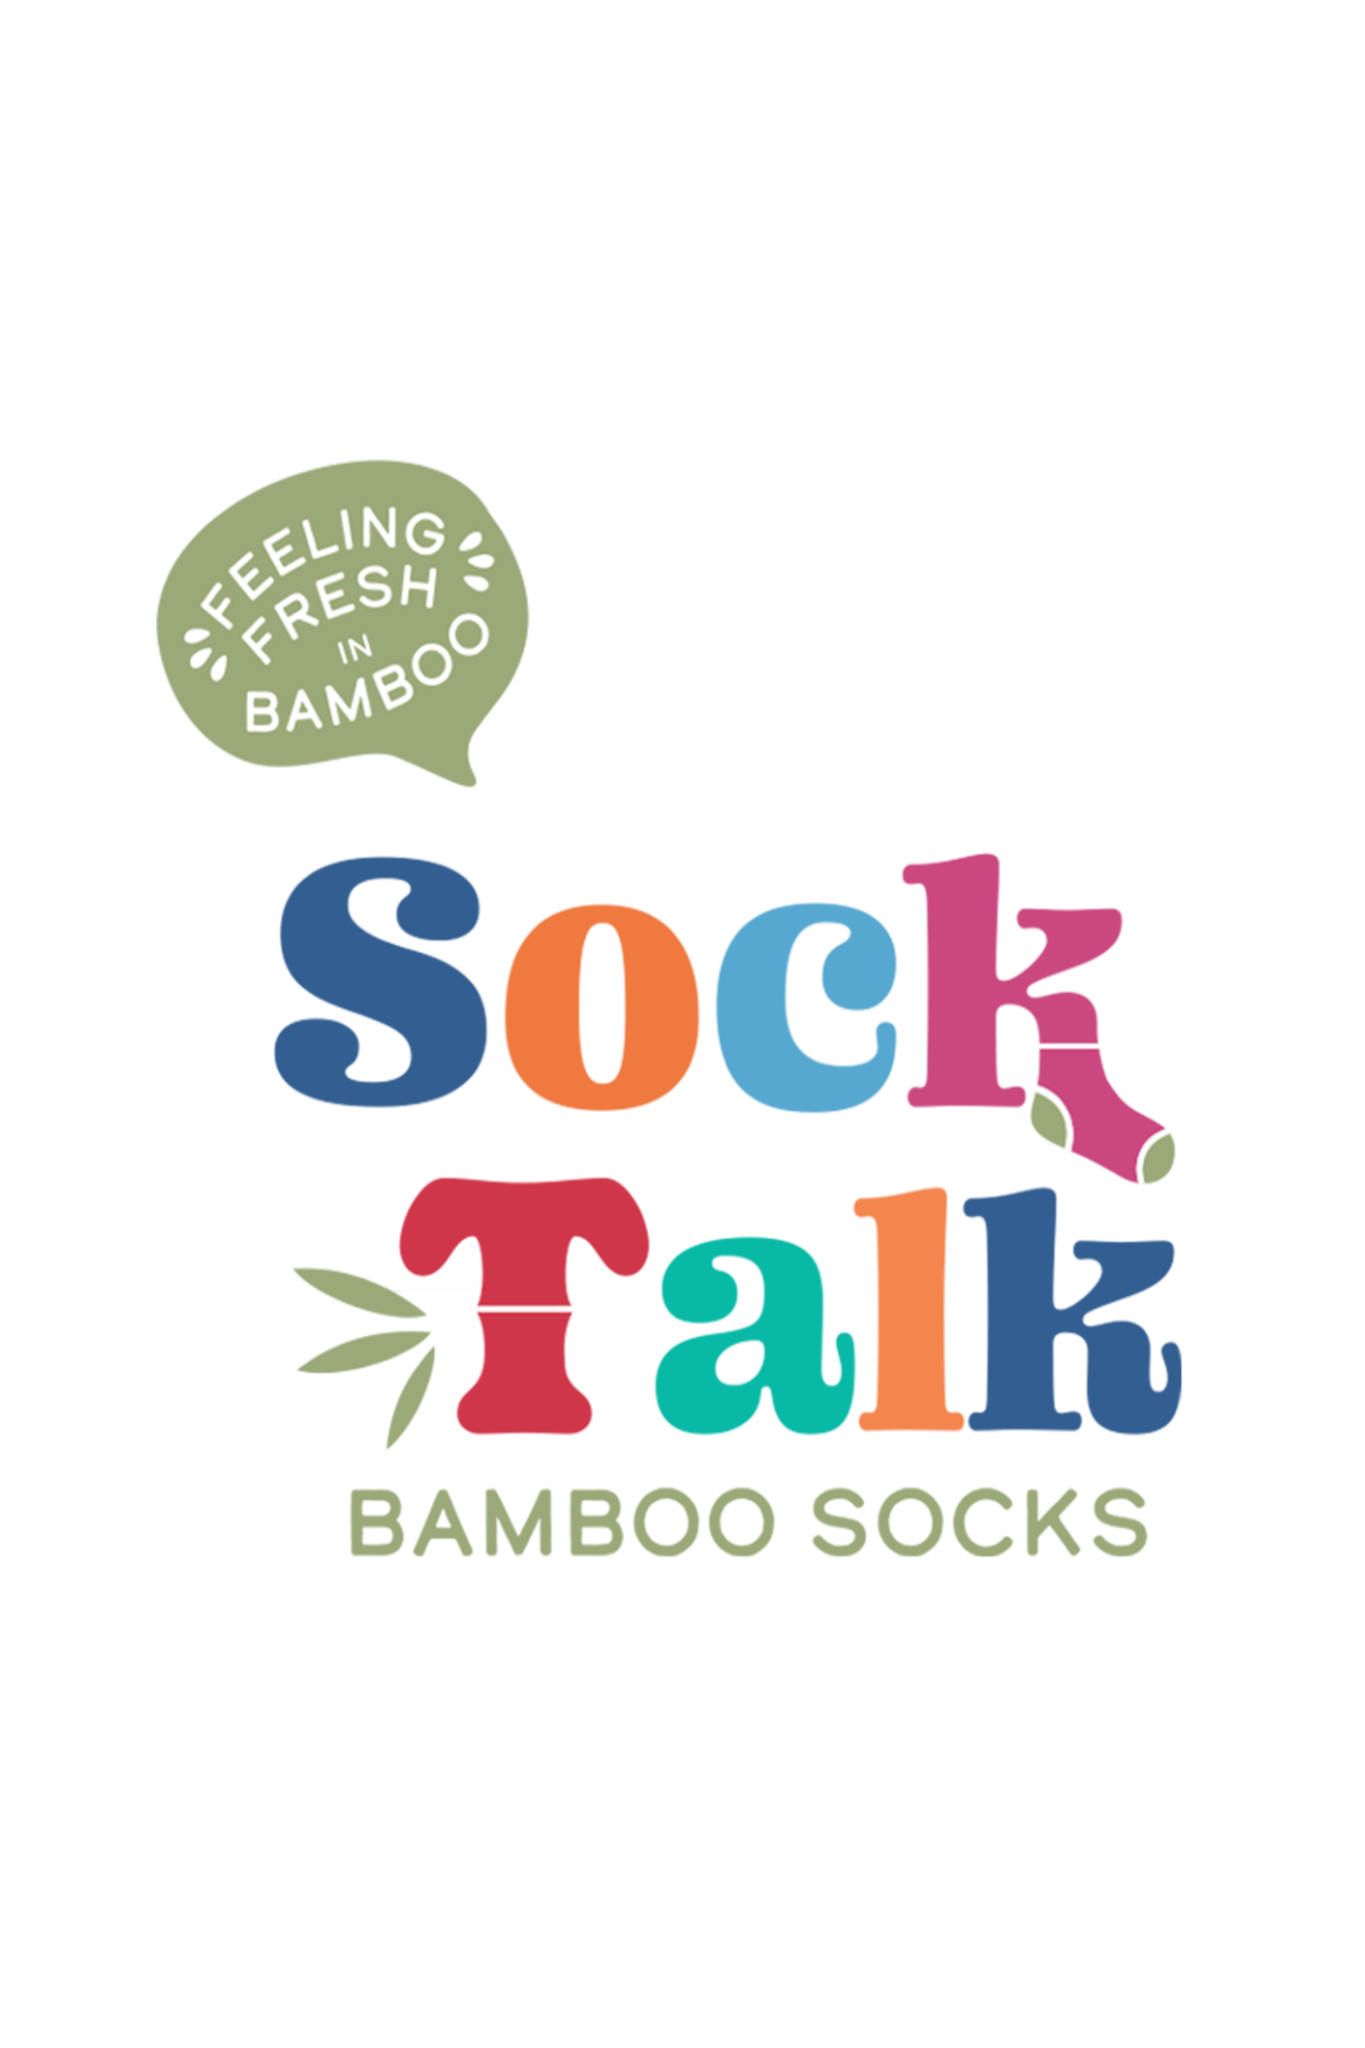 sock talk uk logo